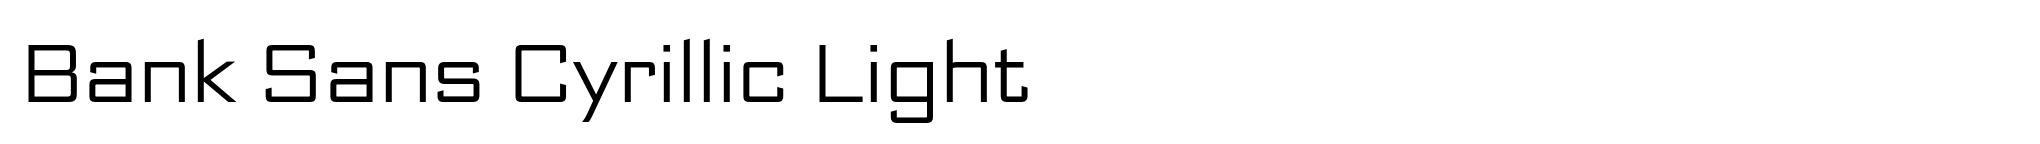 Bank Sans Cyrillic Light image